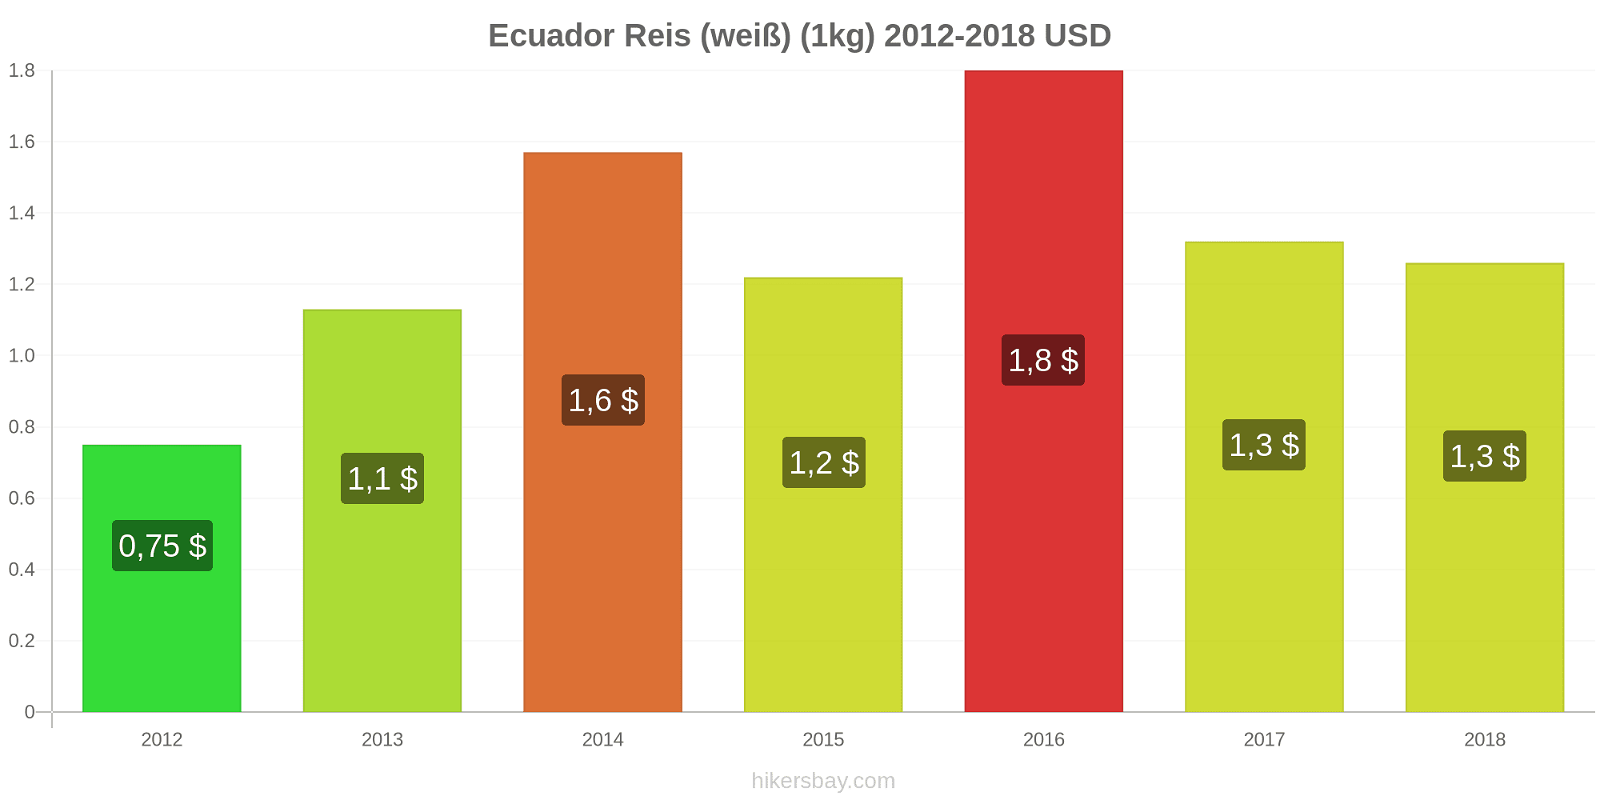 Ecuador Preisänderungen Reis (weiß) (1kg) hikersbay.com